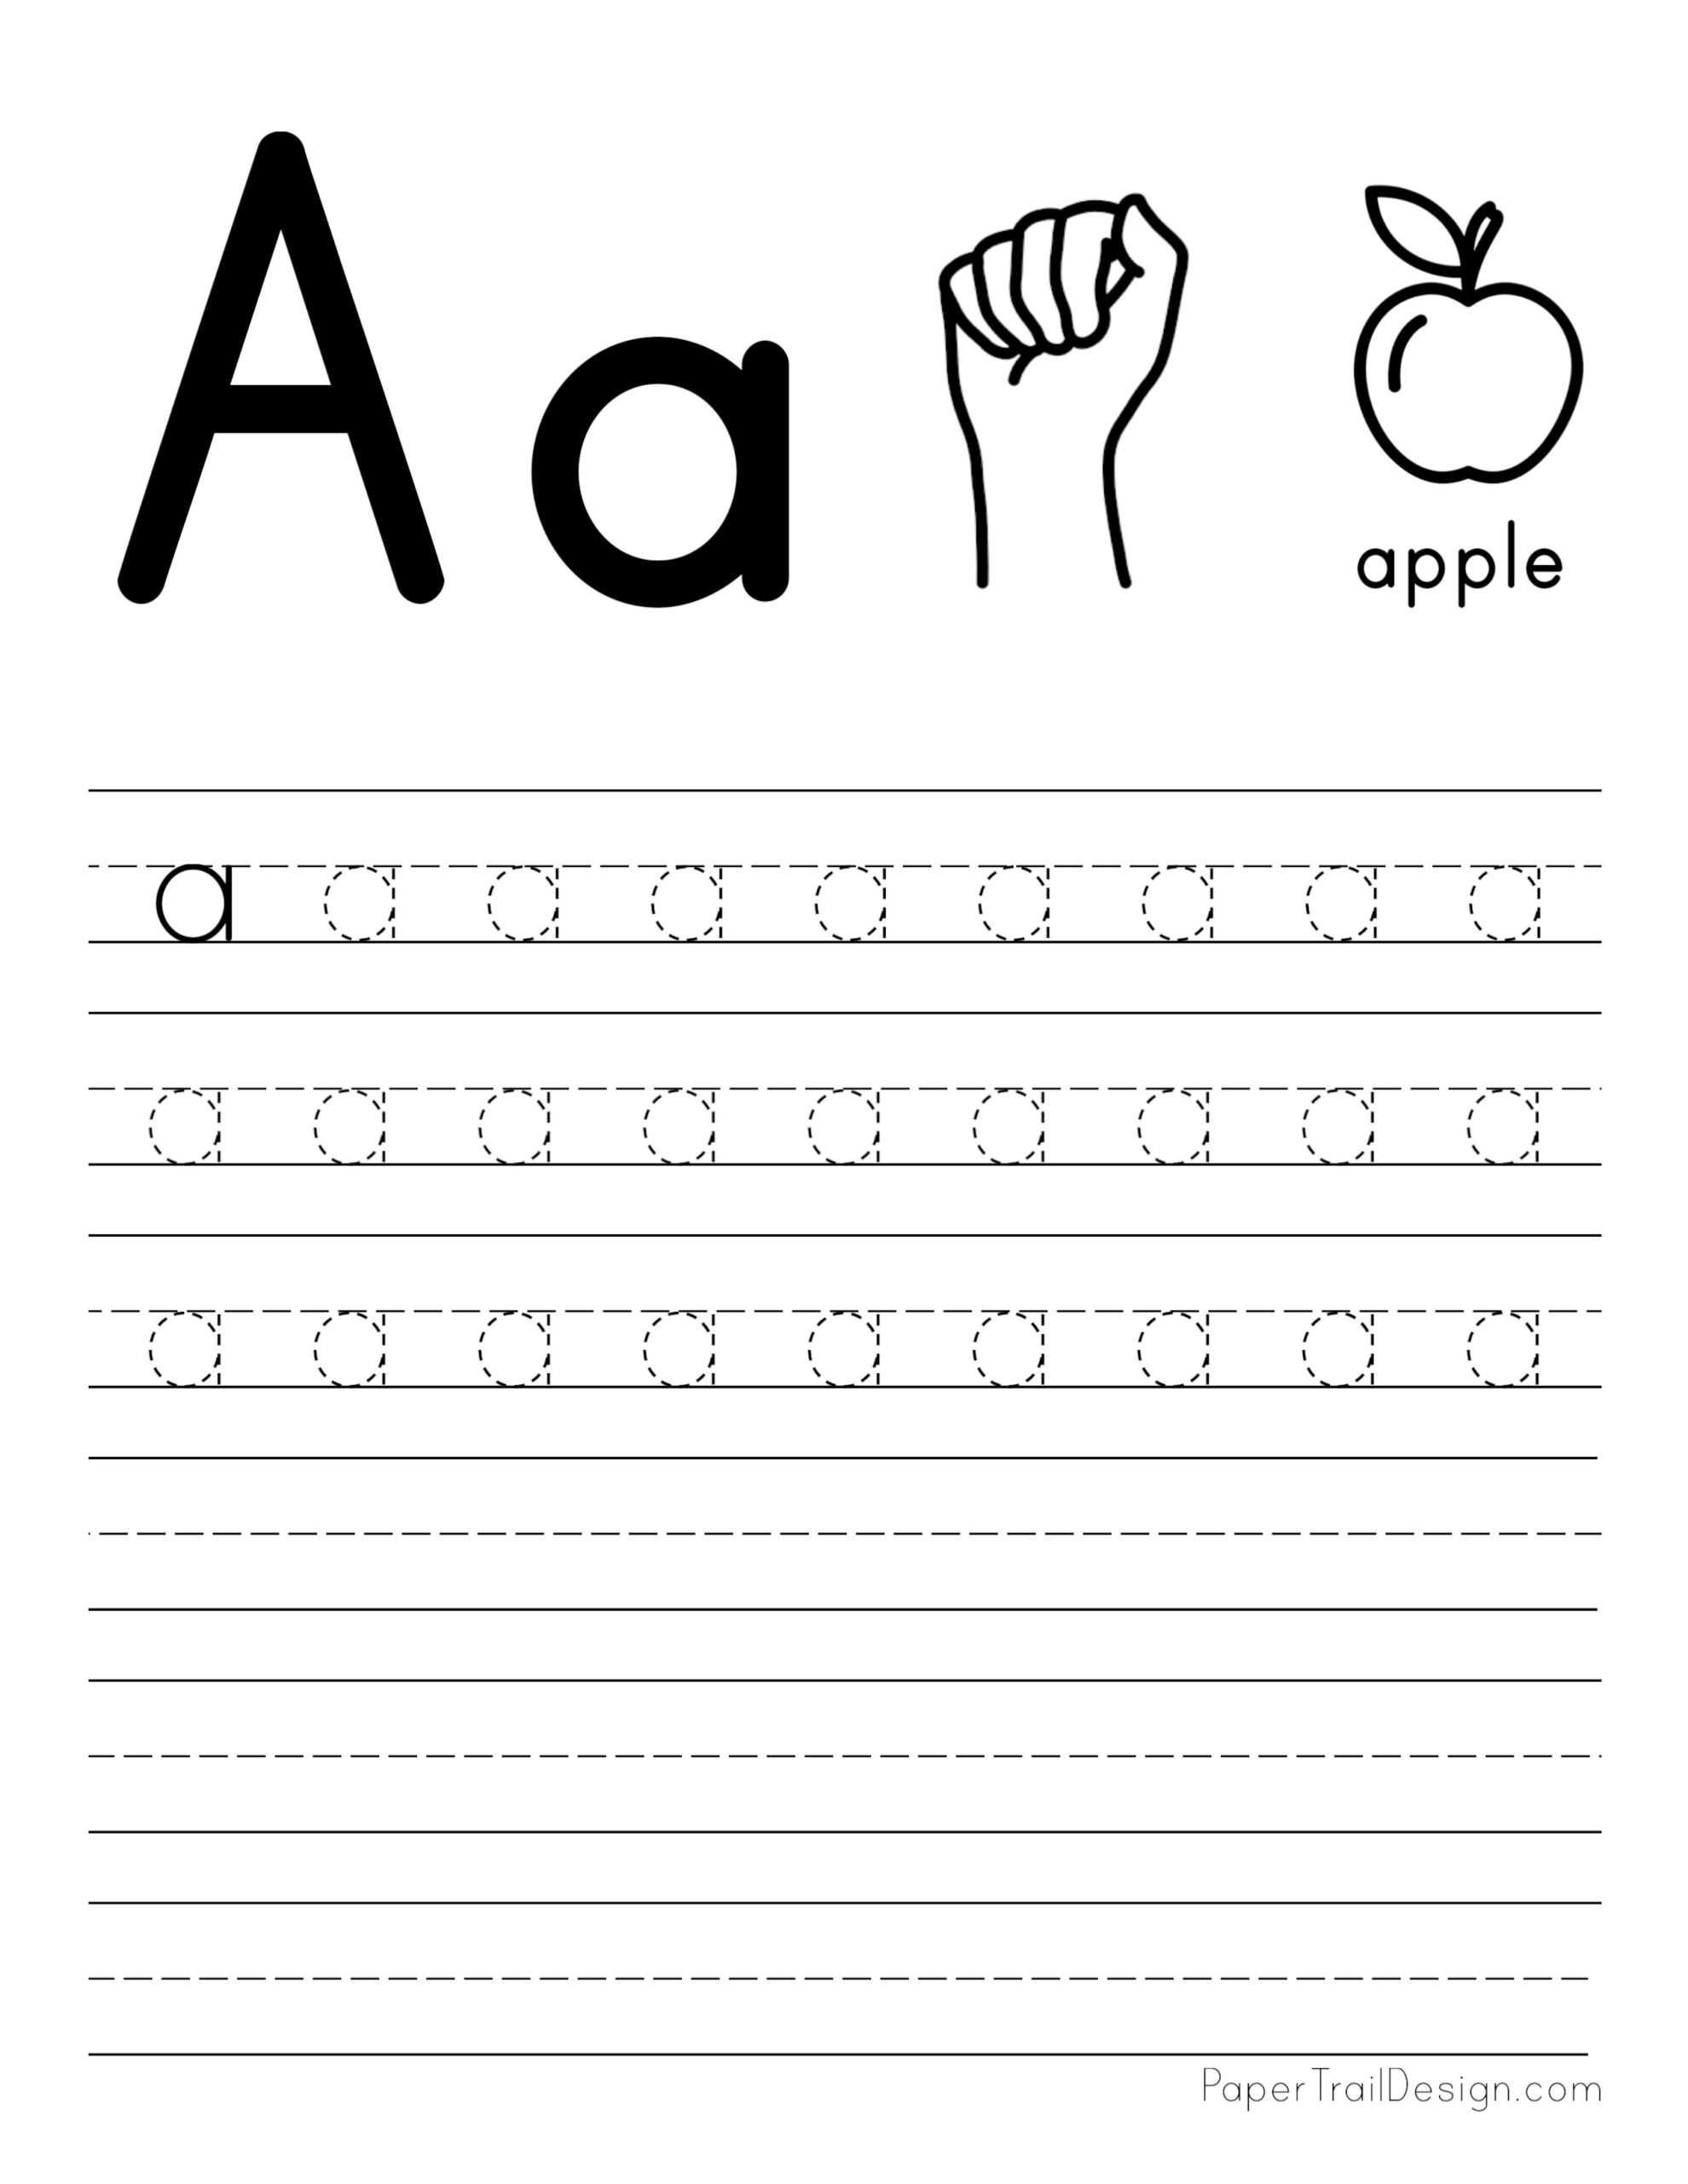 kindergarten-worksheets-tracing-letters-printable-kindergarten-worksheets